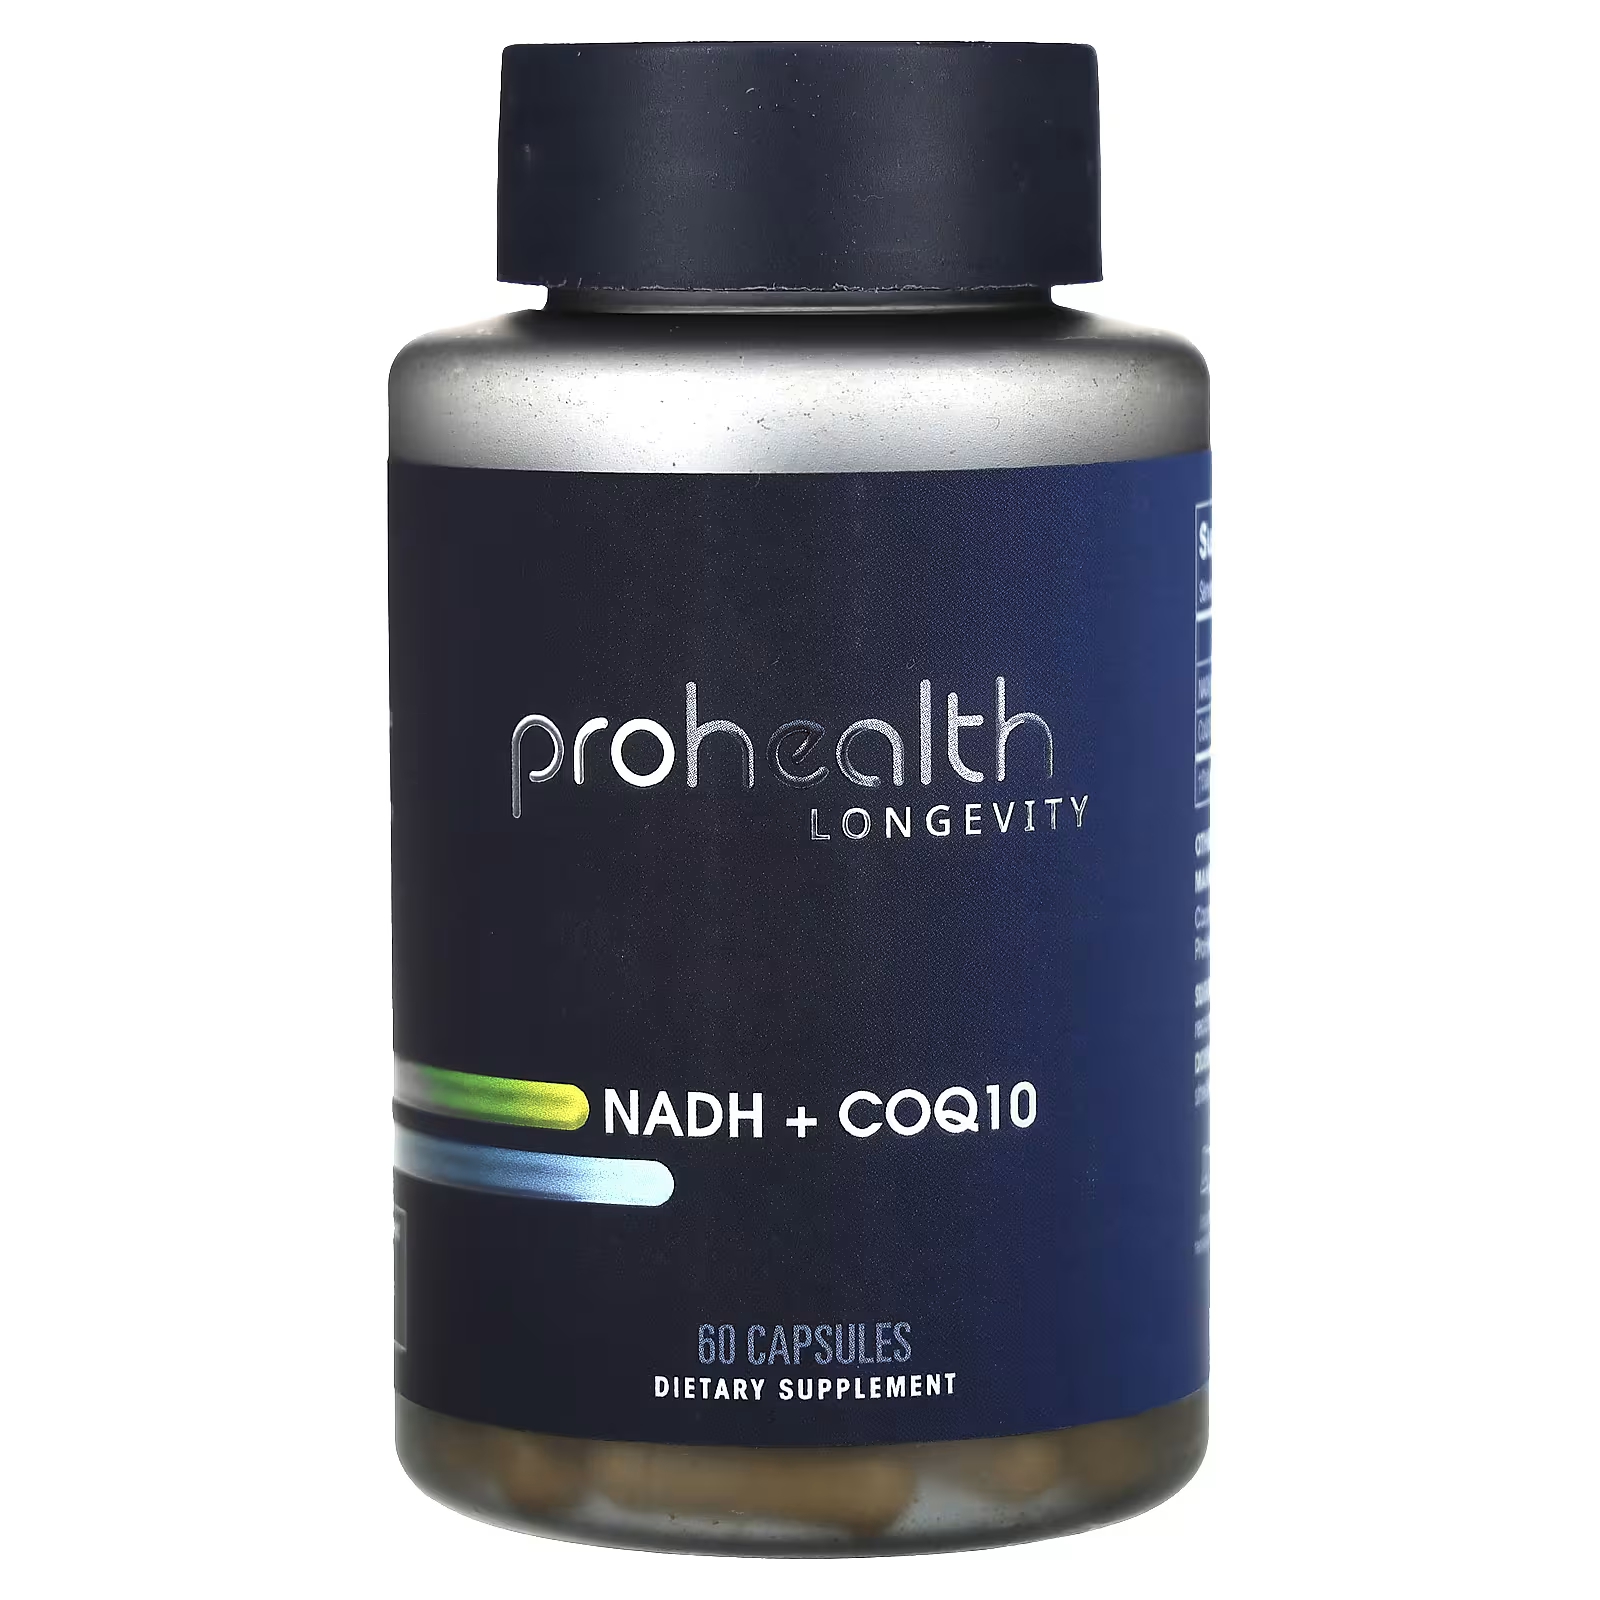 Пищевая добавка ProHealth Longevity НАДН + CoQ10, 60 капсул